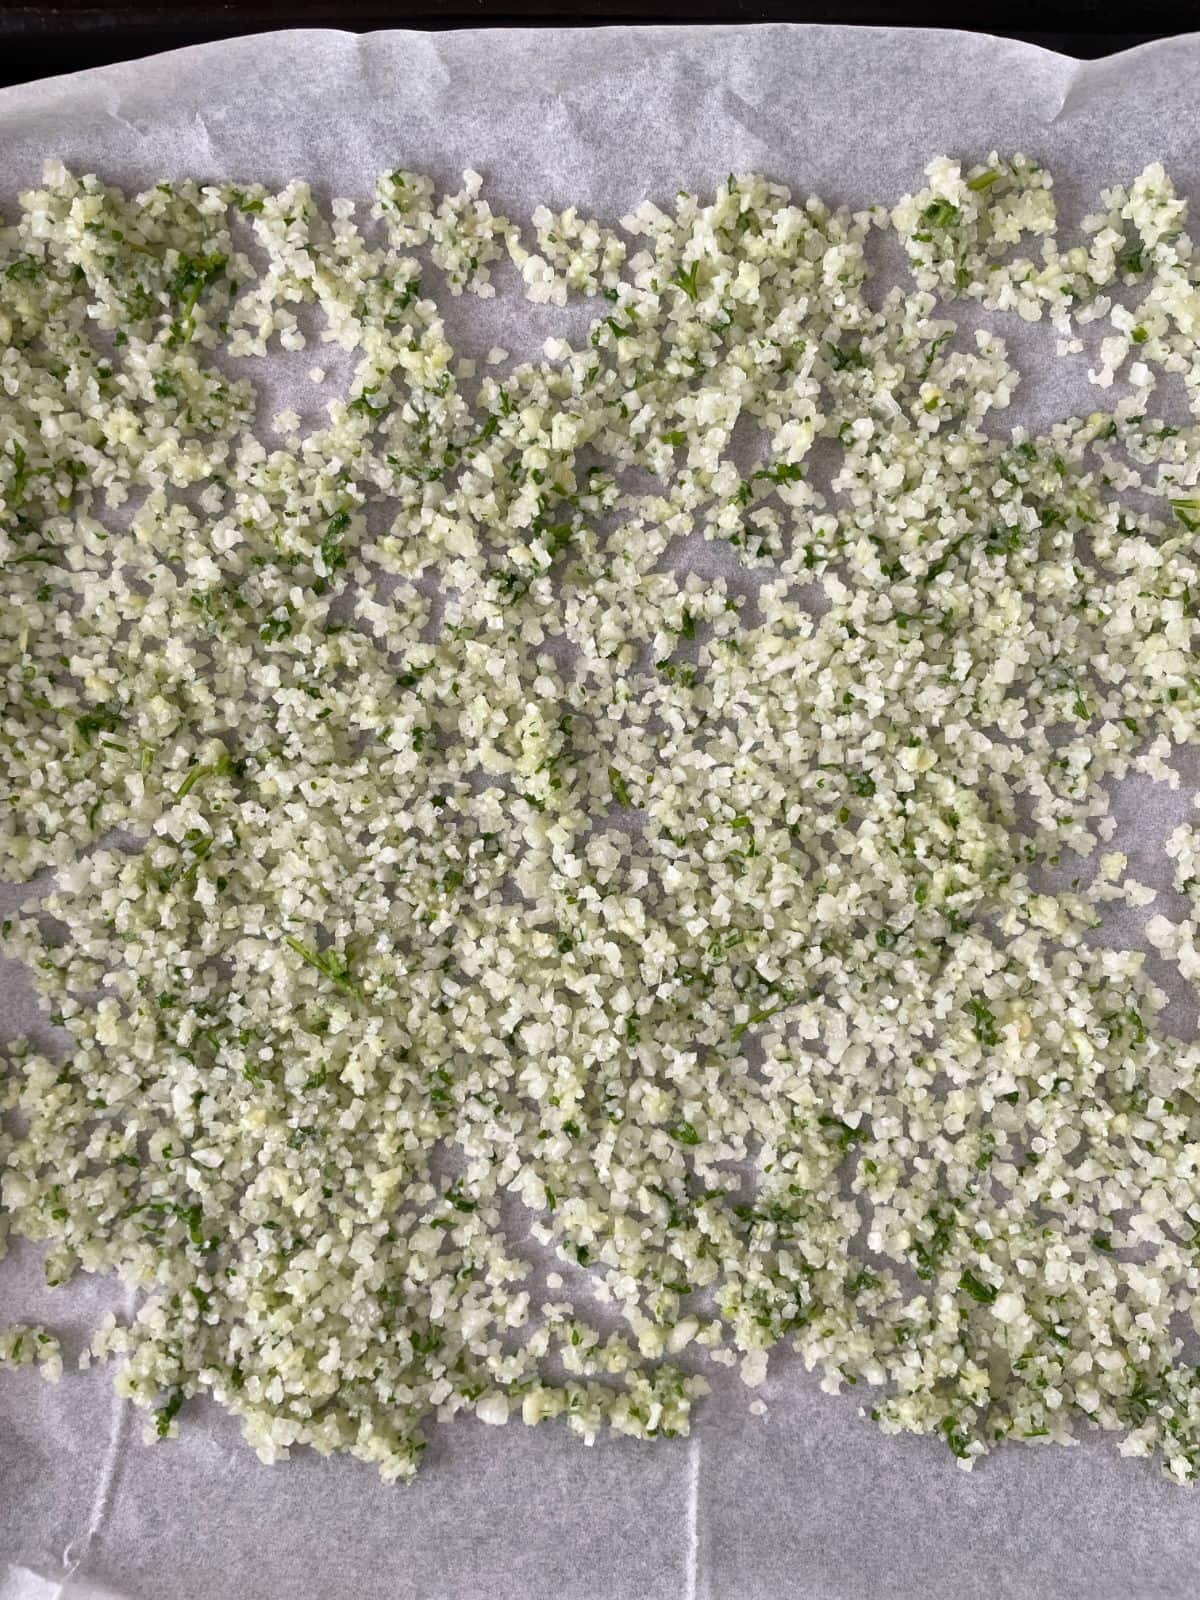 garlic parsley salt in a baking sheet